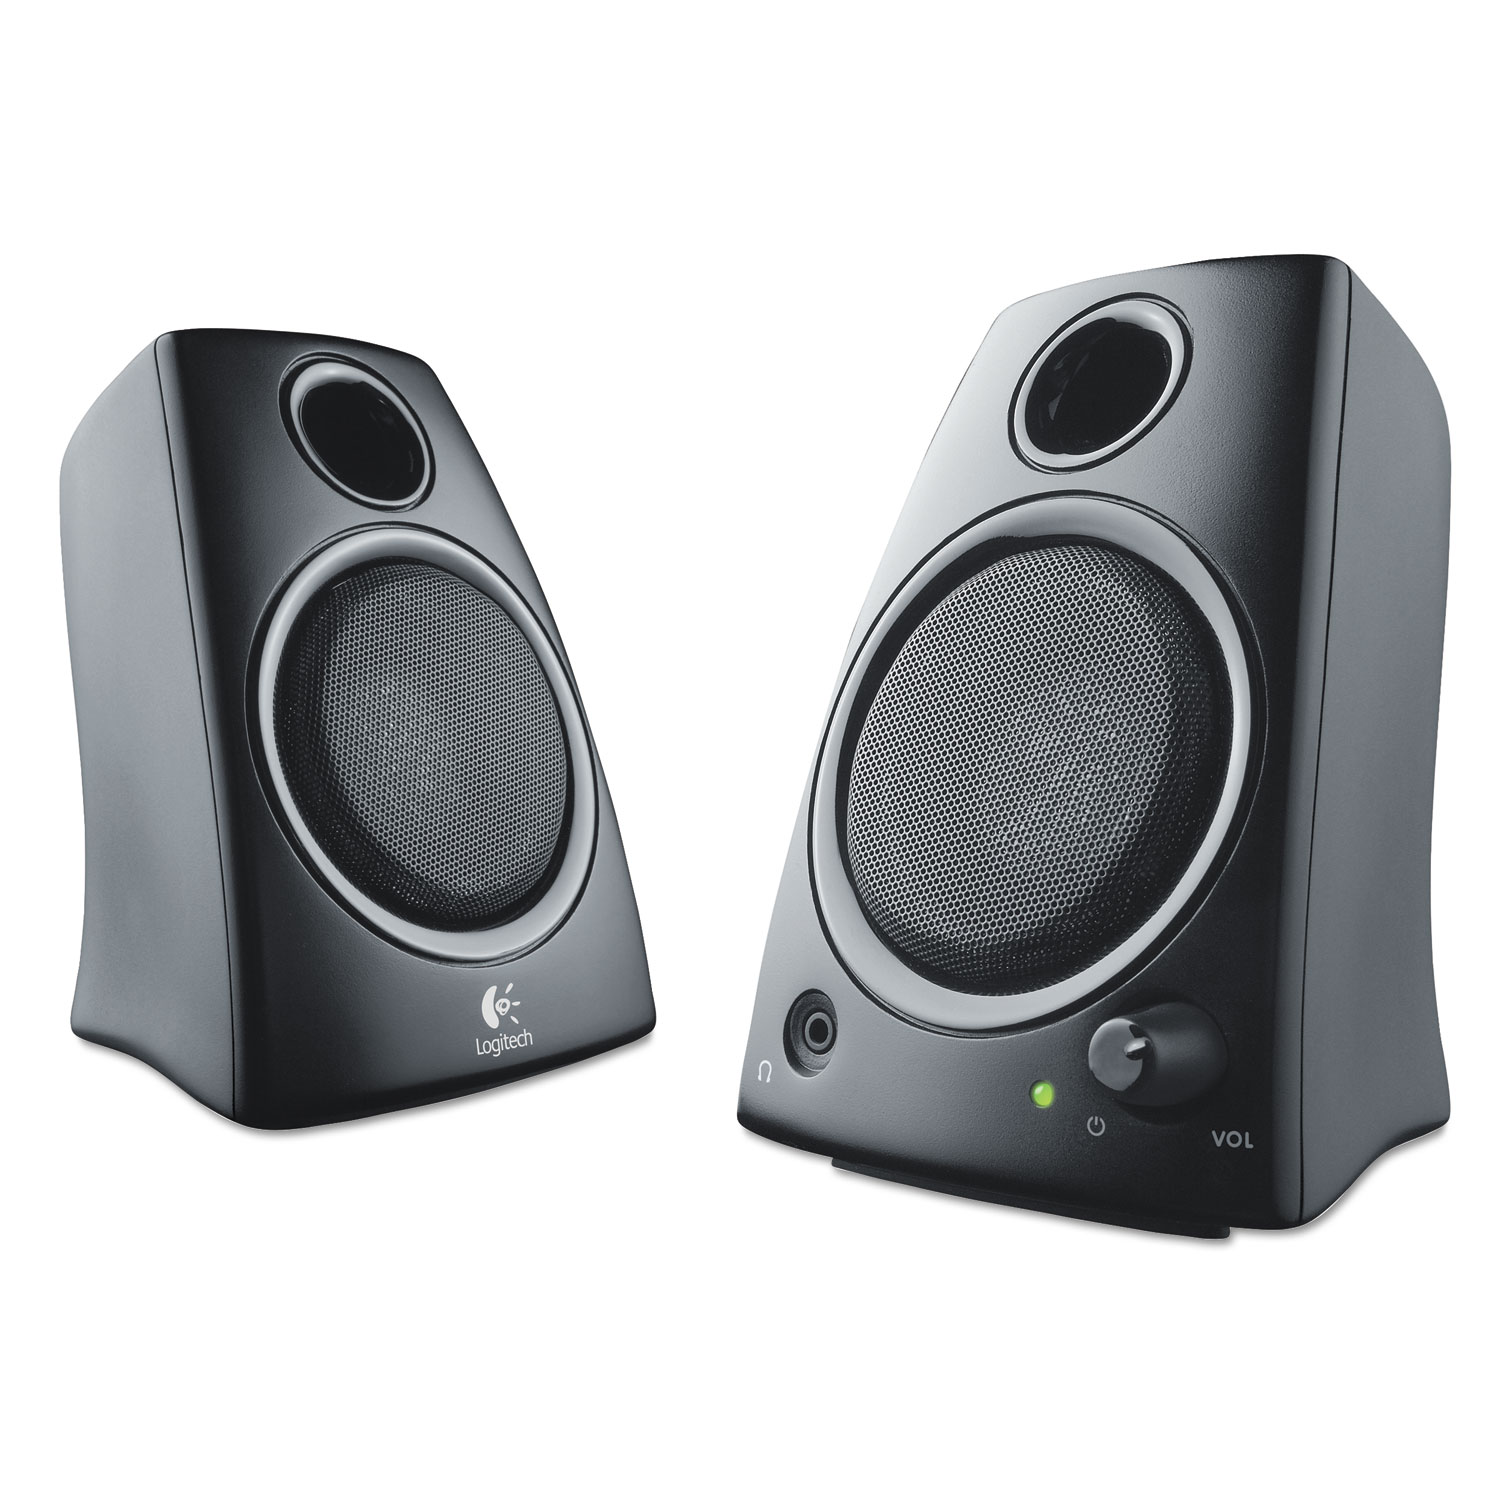  Logitech 980-000417 Z130 Compact 2.0 Stereo Speakers, 3.5mm Jack, Black (LOG980000417) 